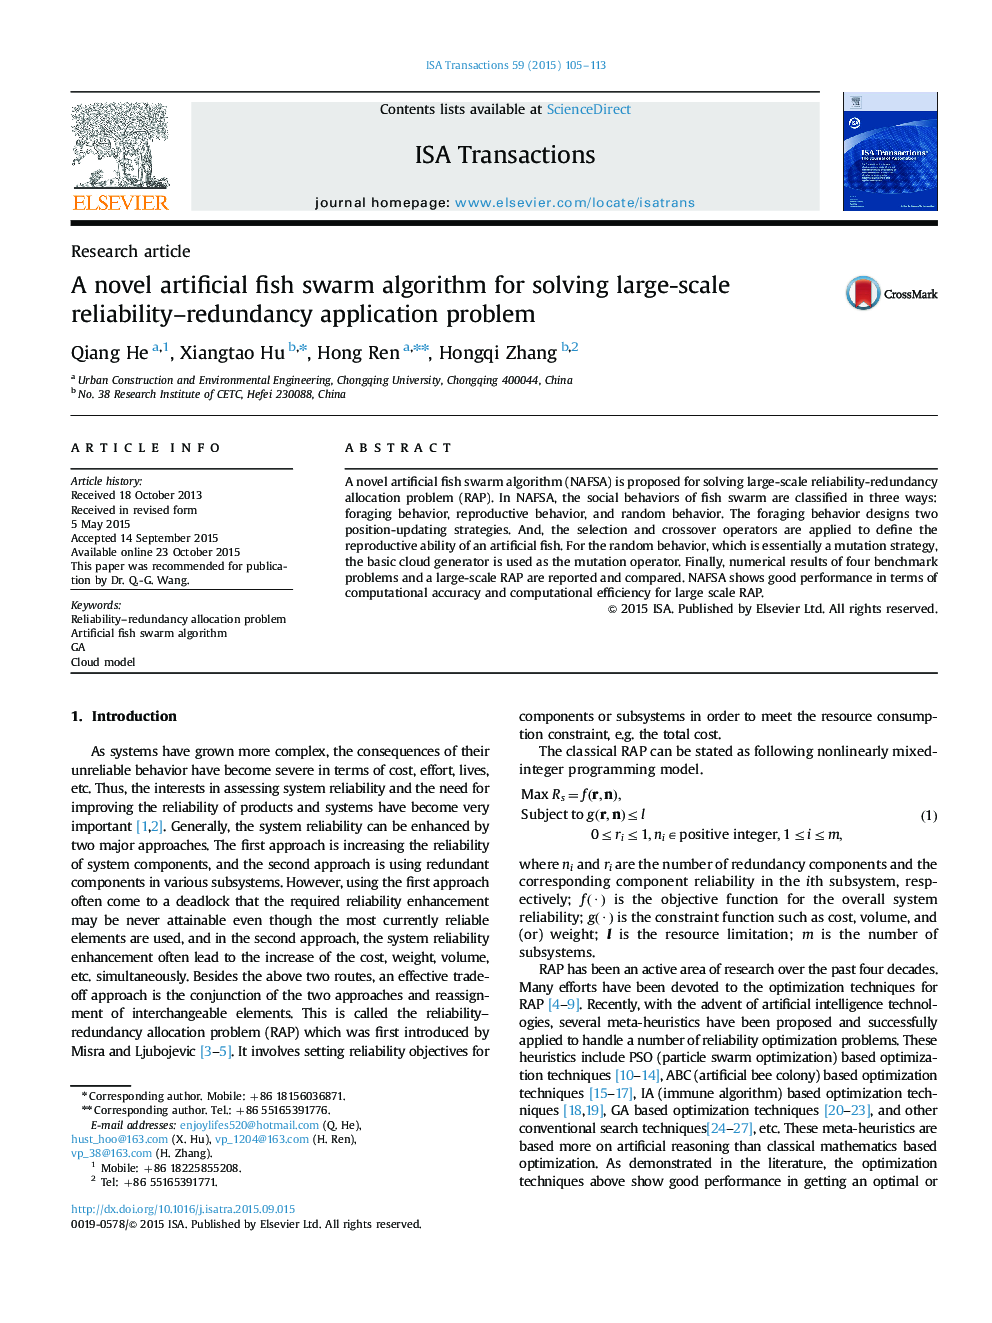 Research articleA novel artificial fish swarm algorithm for solving large-scale reliability-redundancy application problem